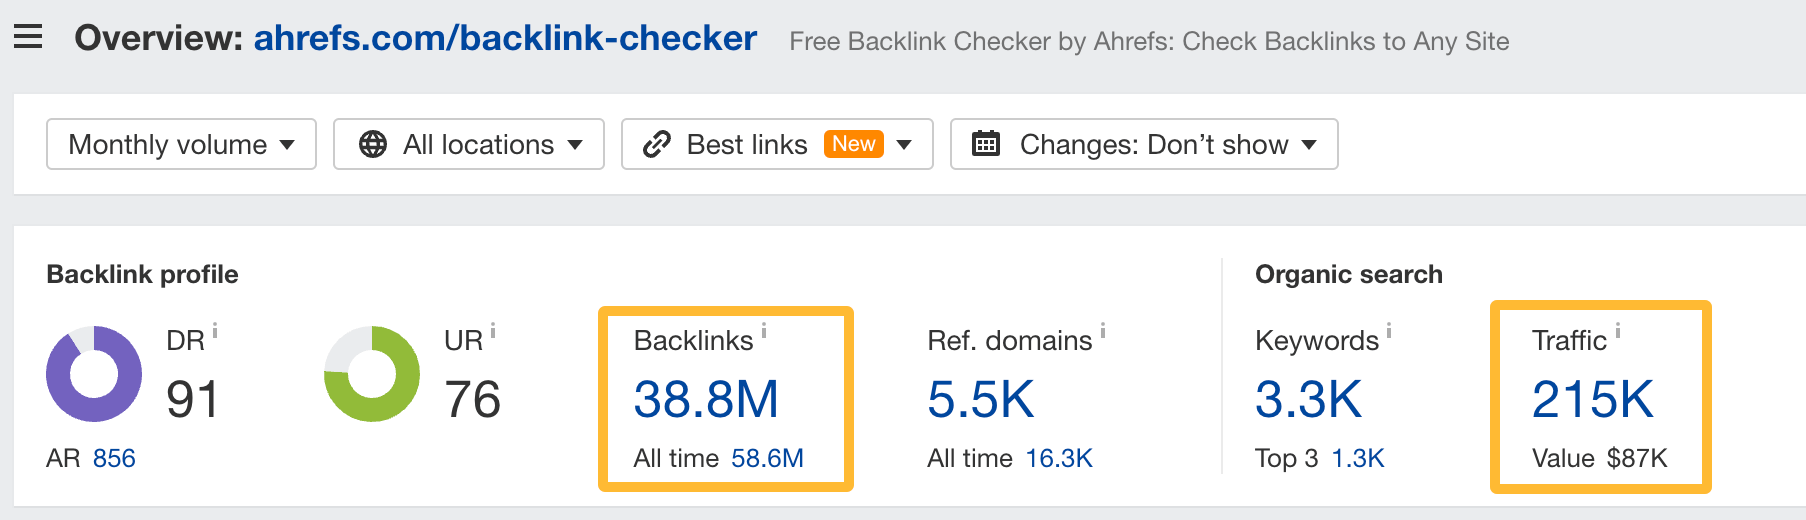 Backlink and traffic data via Ahrefs. 